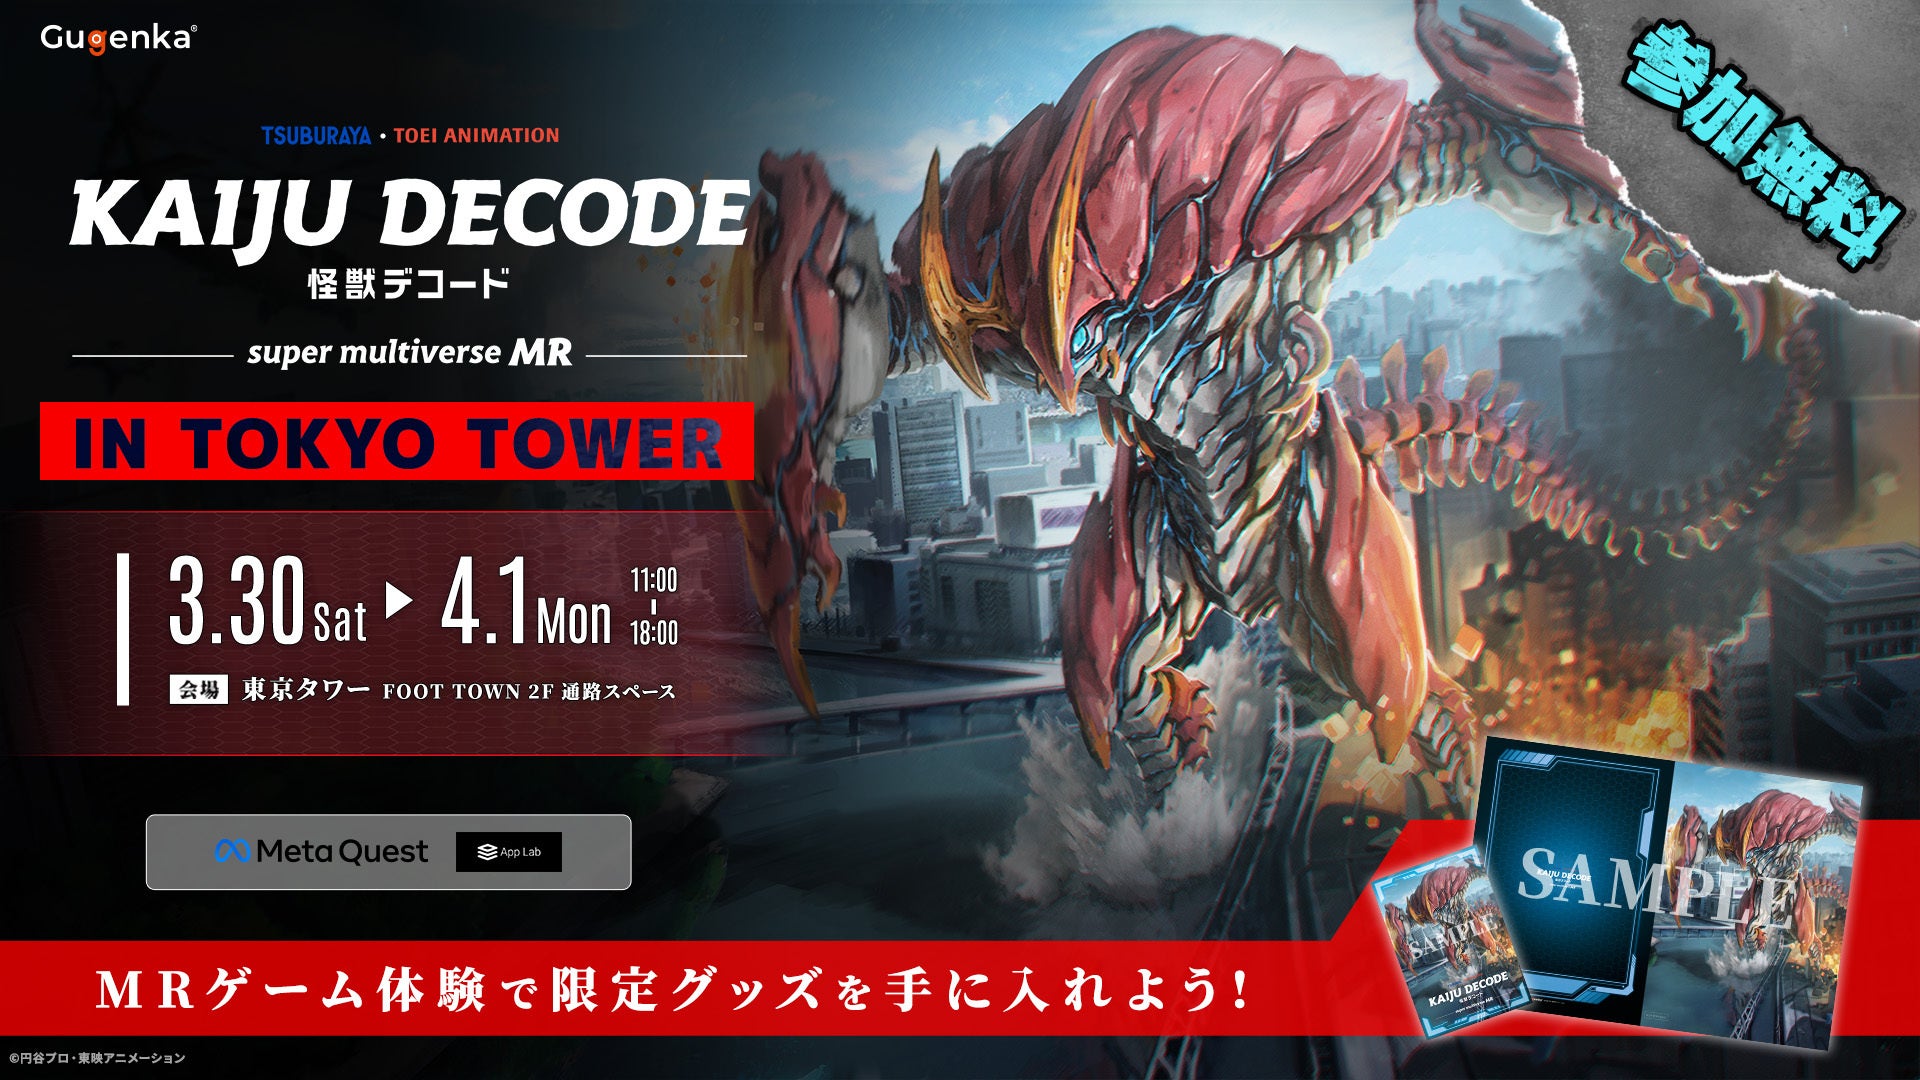 Meta QuestのMRゲーム「怪獣デコード」 東京タワーで無料体験イベントを開催